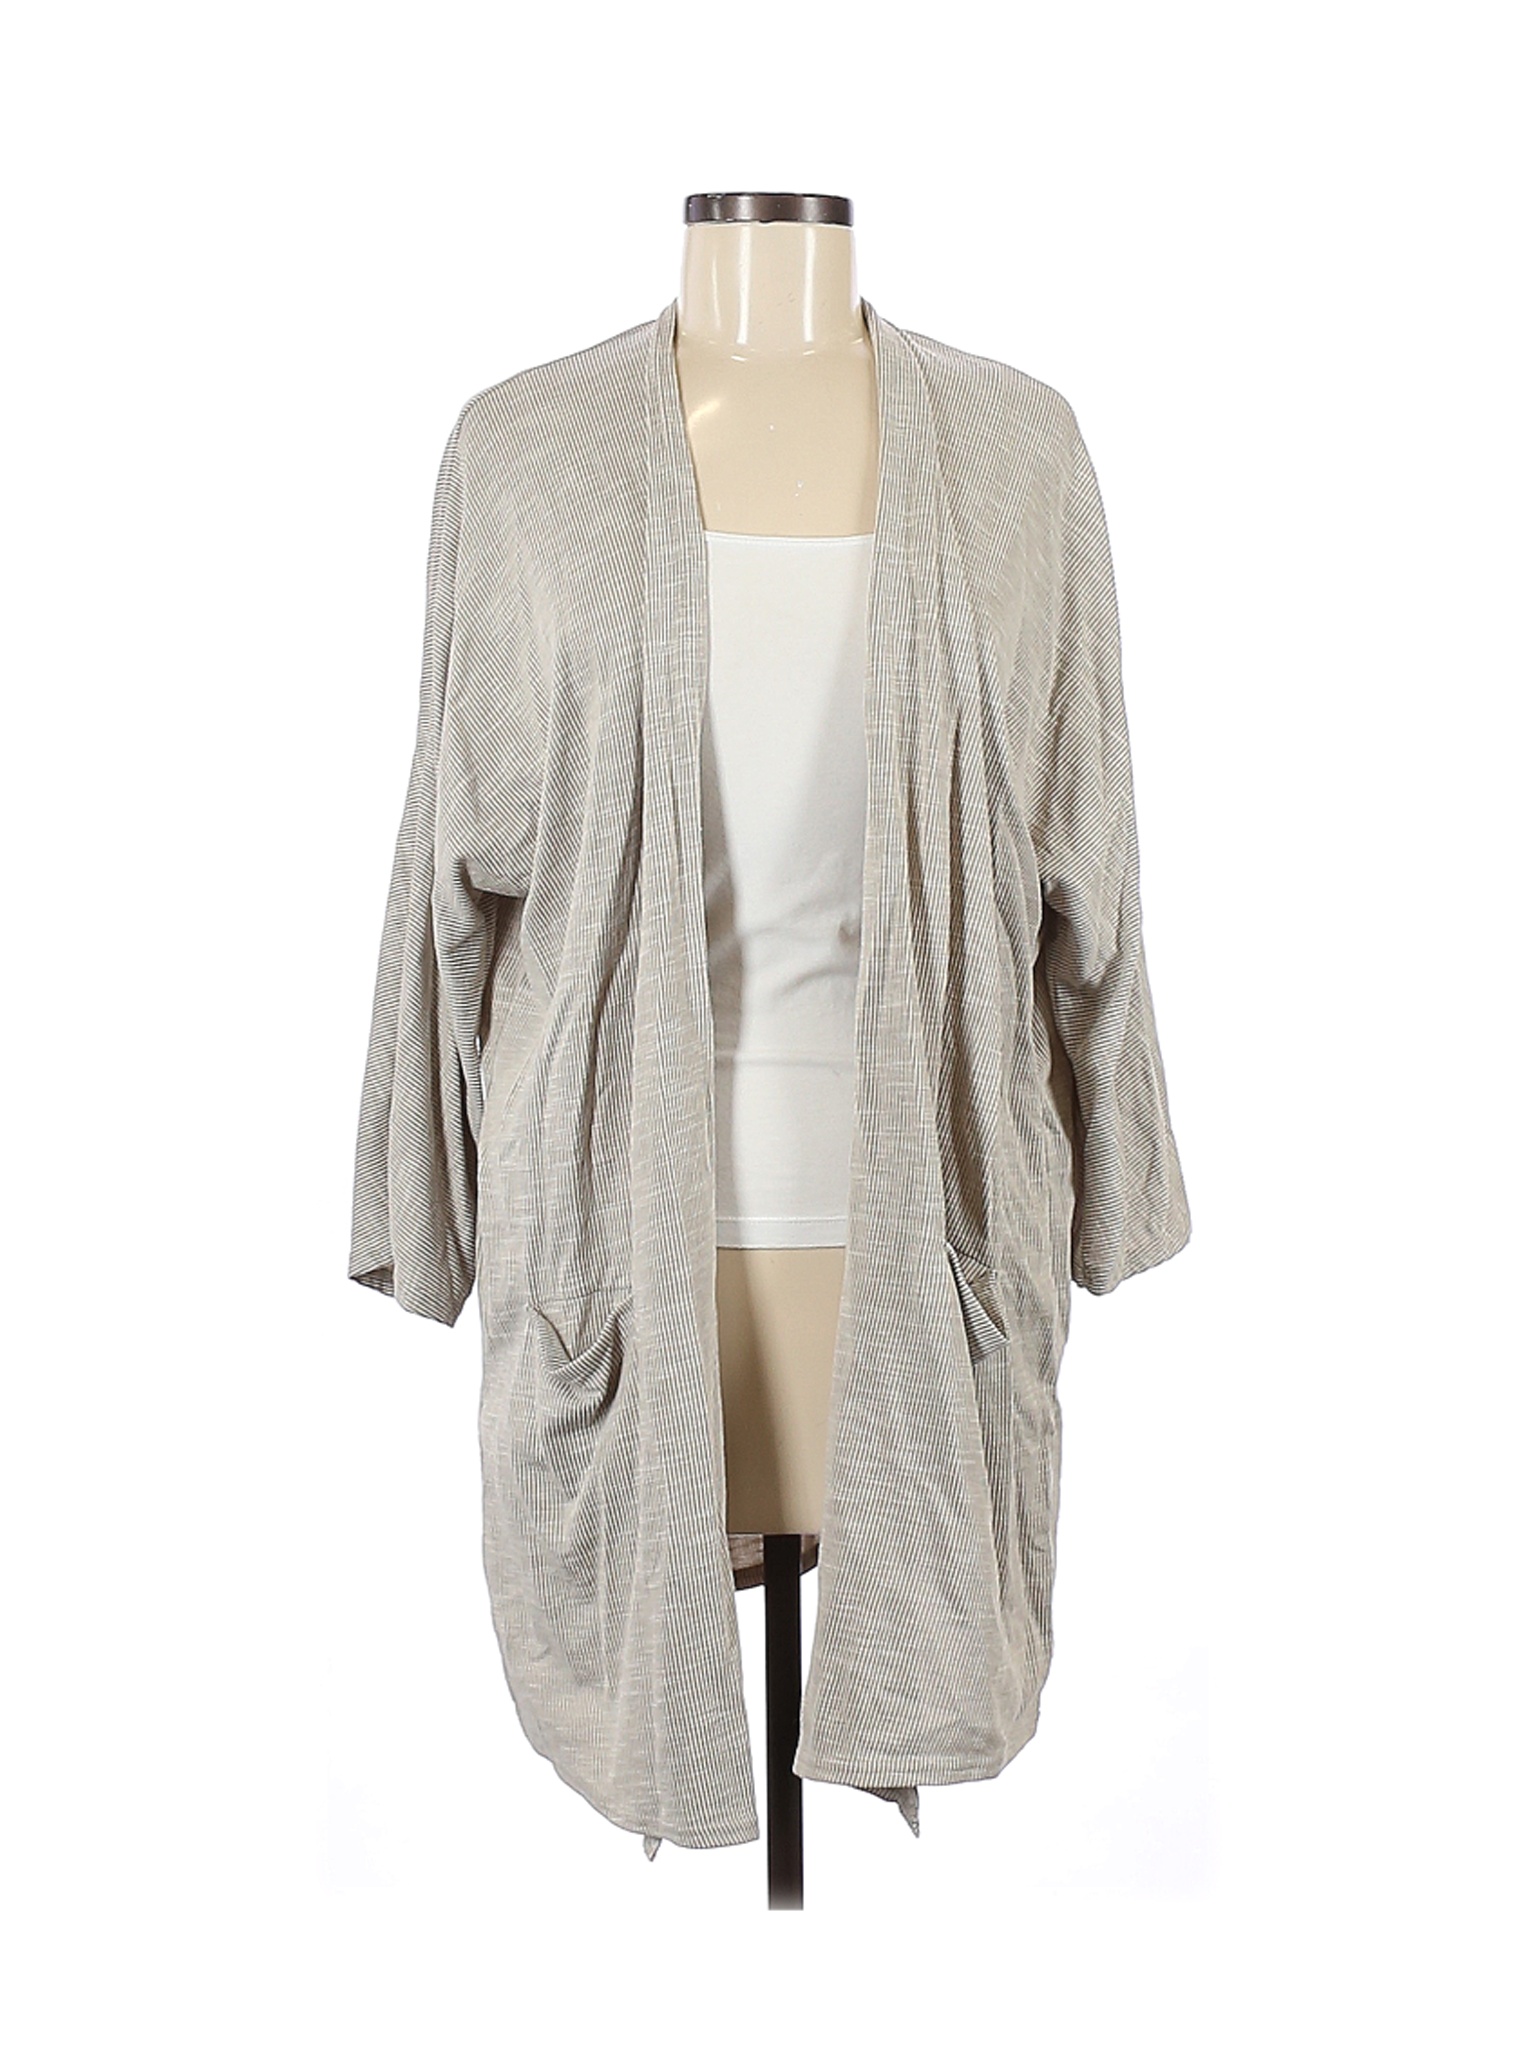 NWT DONNI Women Gray Cardigan One Size | eBay